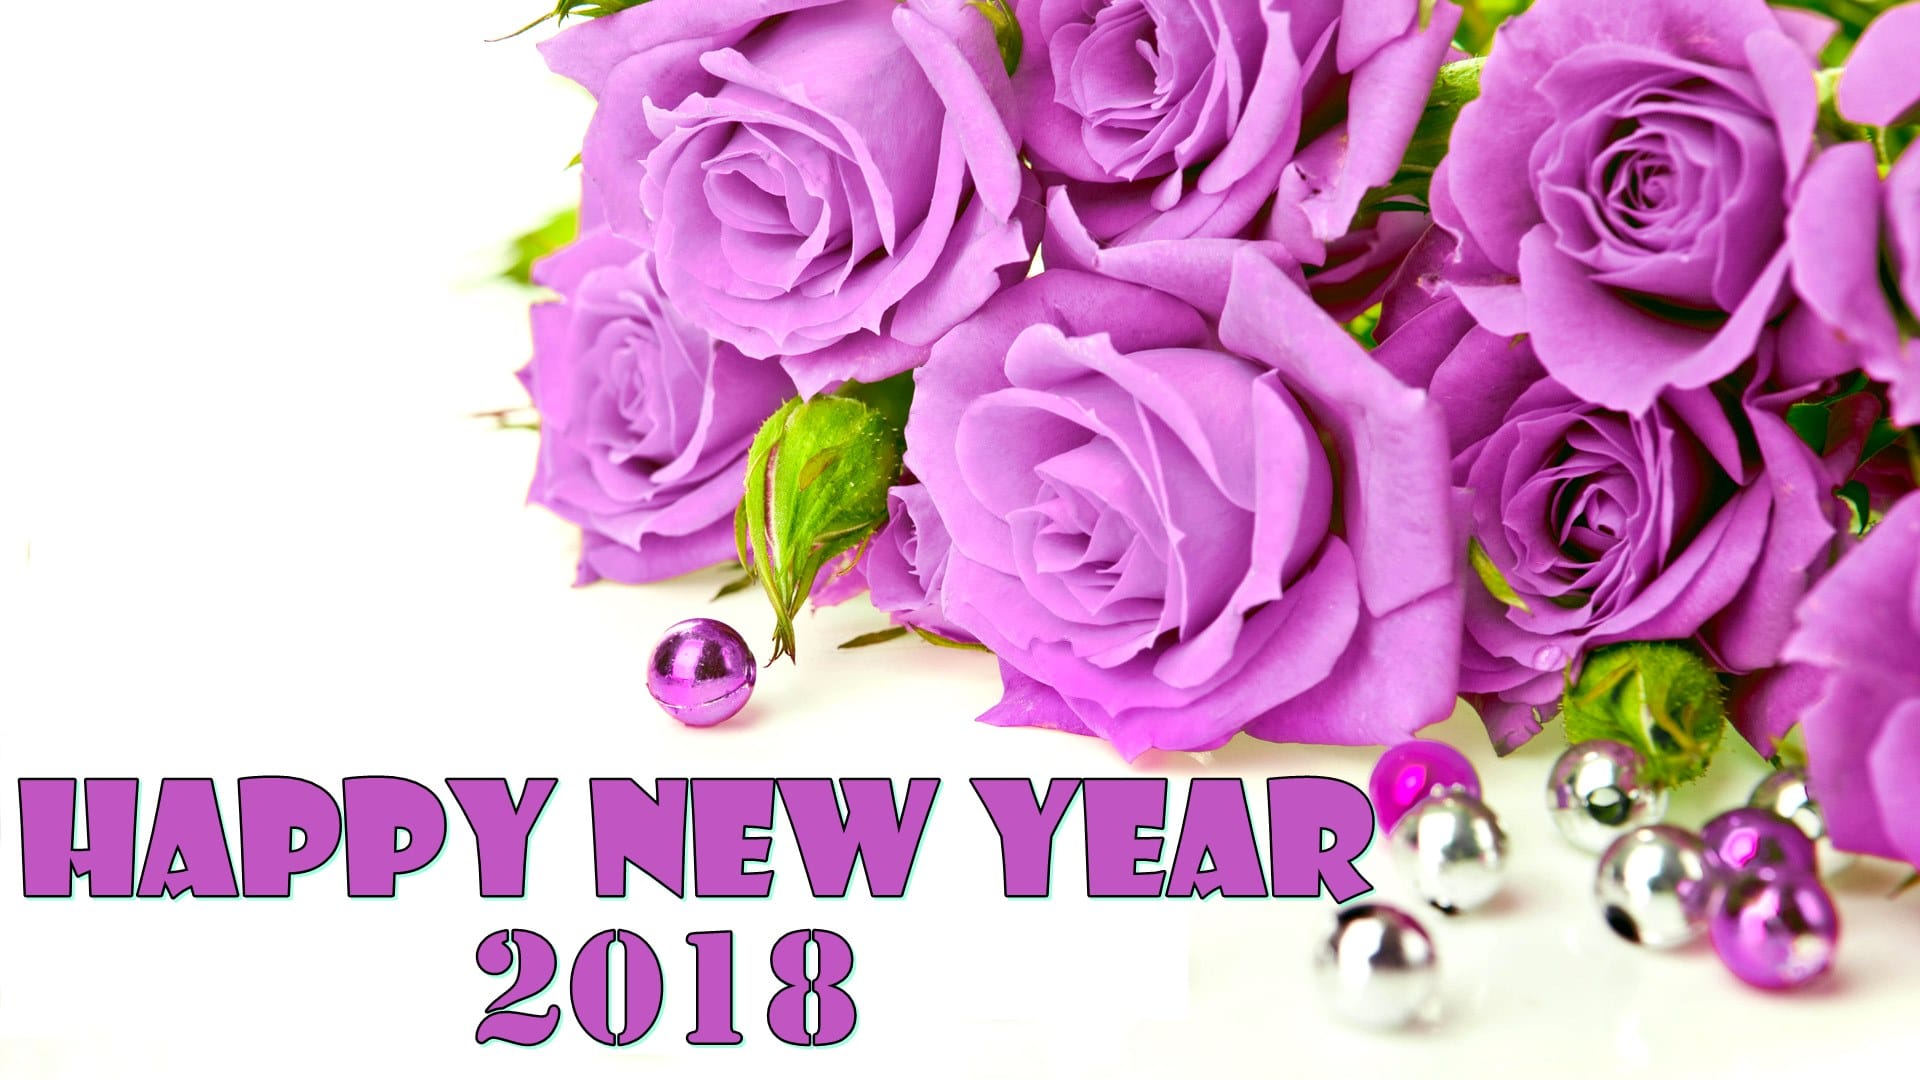 happy new year 2018 wallpapers,cut flowers,flower,purple,pink,garden roses